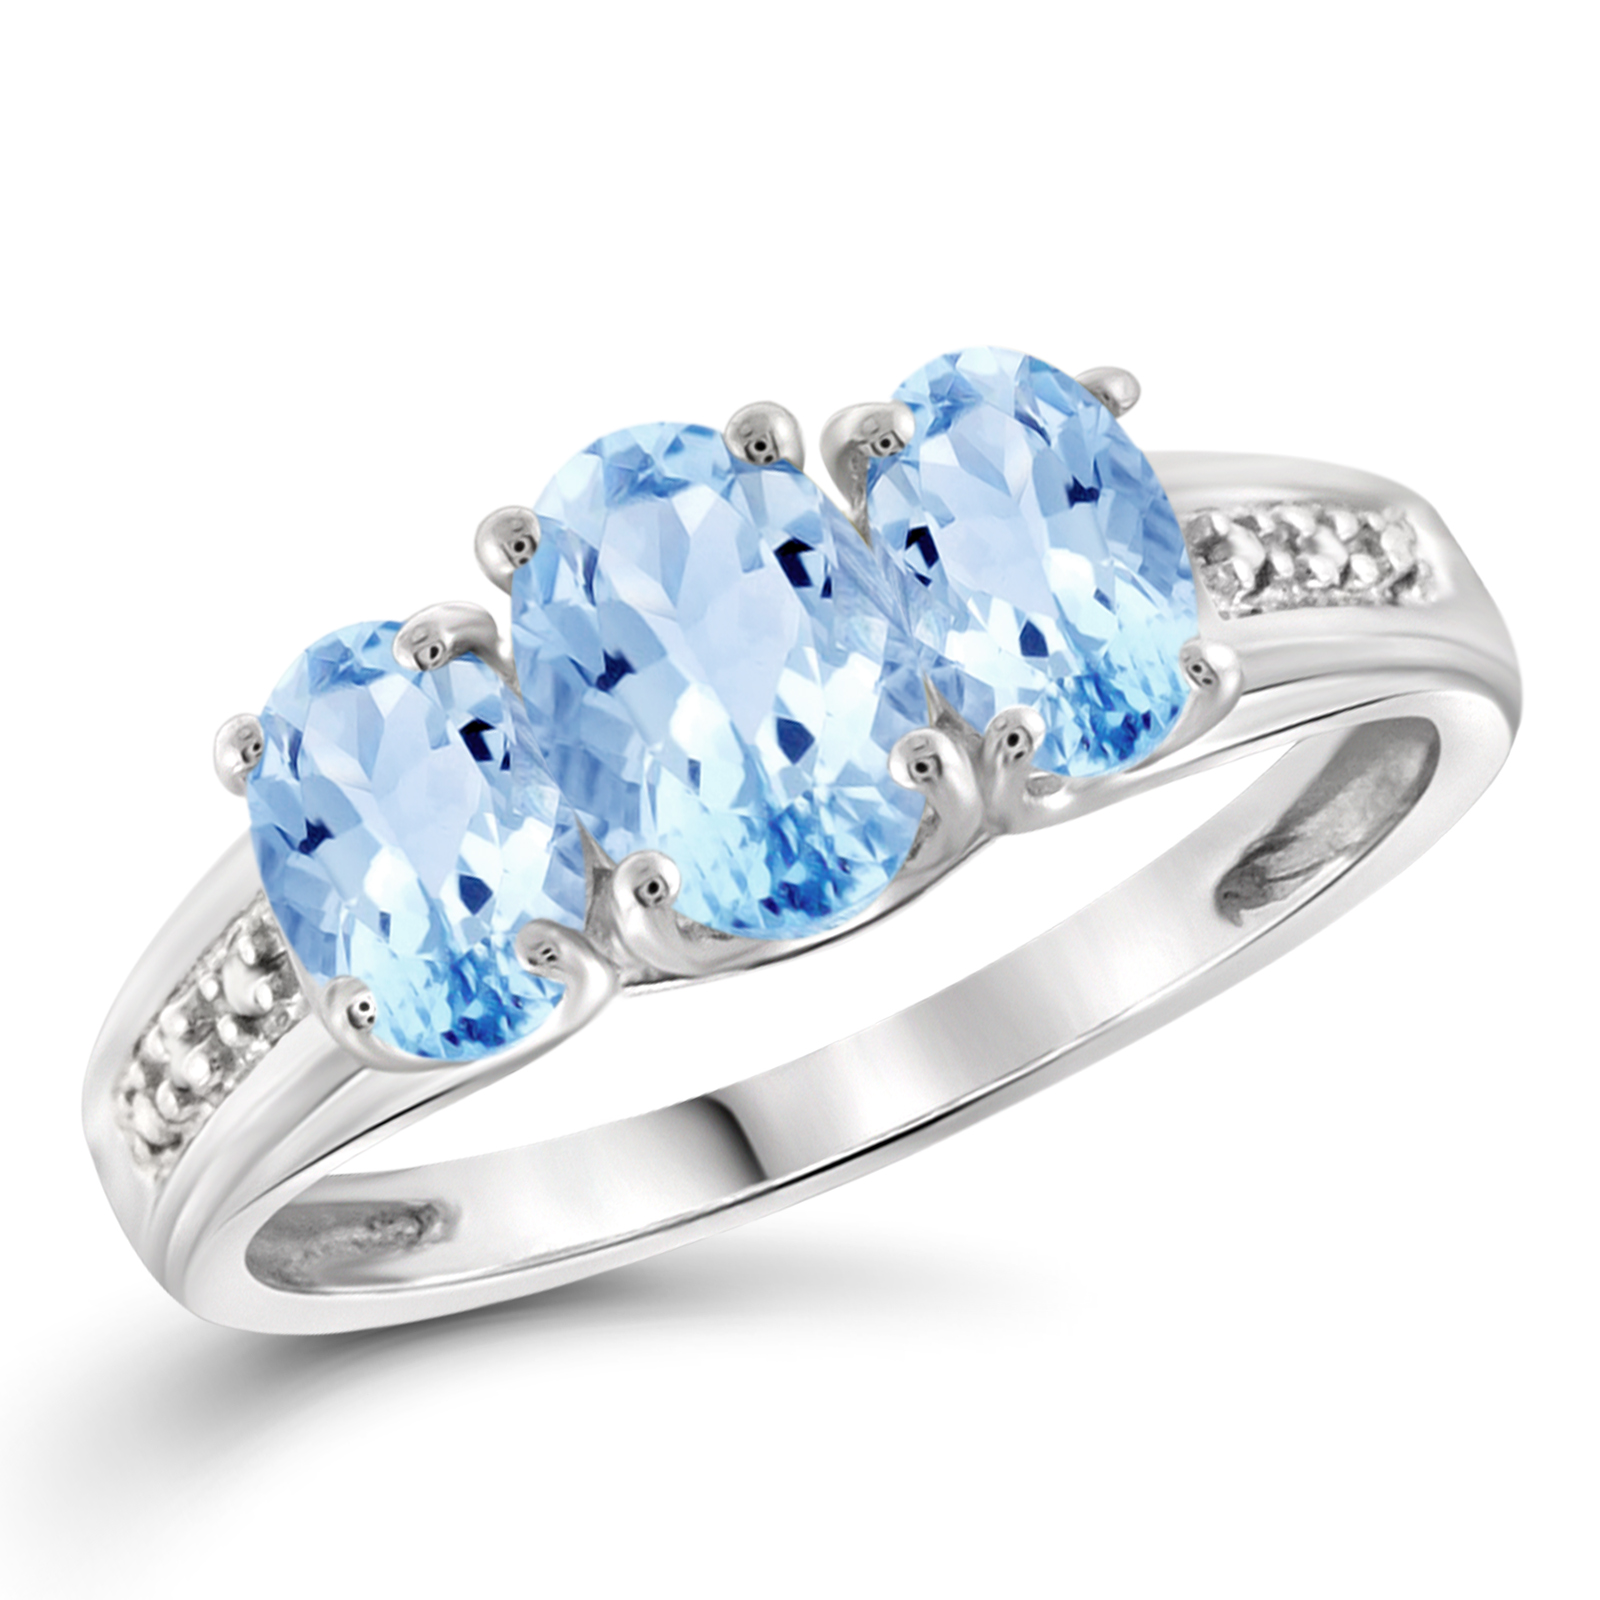 2.20 CTTW Genuine Blue Topaz Gemstone & Accent White Diamond Ring In Sterling Silver